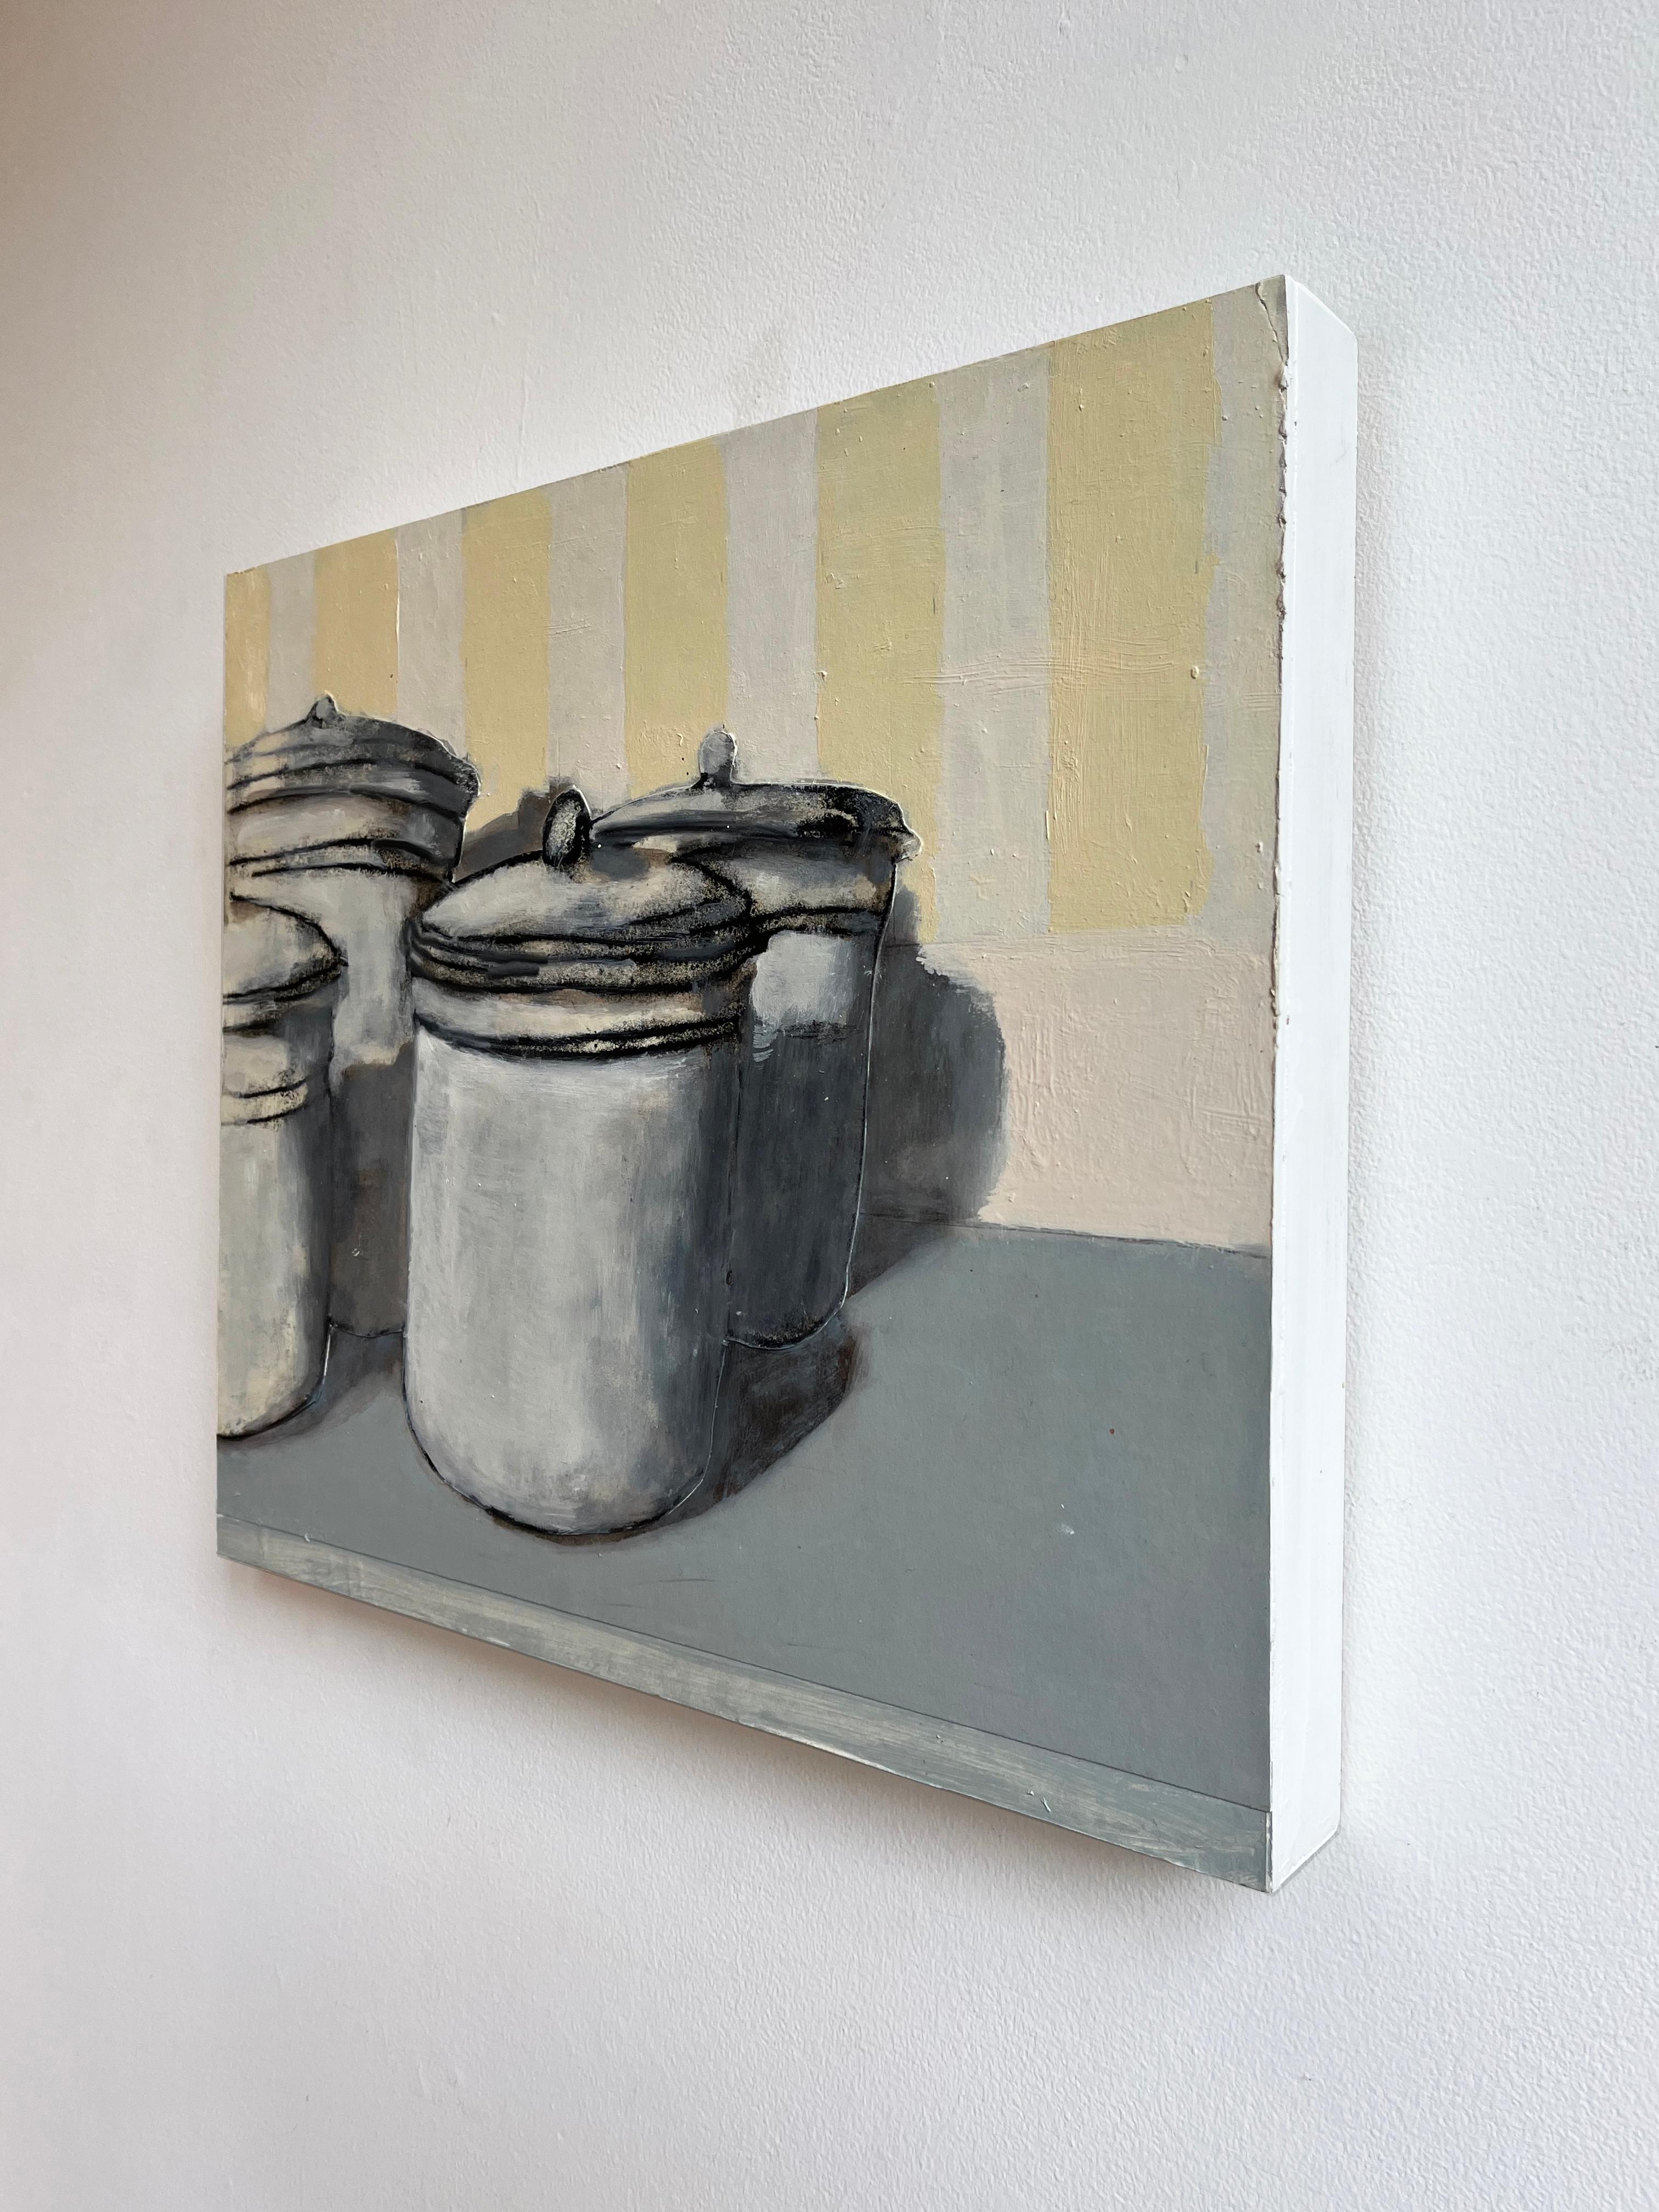 Flour, Sugar, Cornmeal, Tea (Contemporary Still Life Painting of Kitchen Jars) For Sale 1